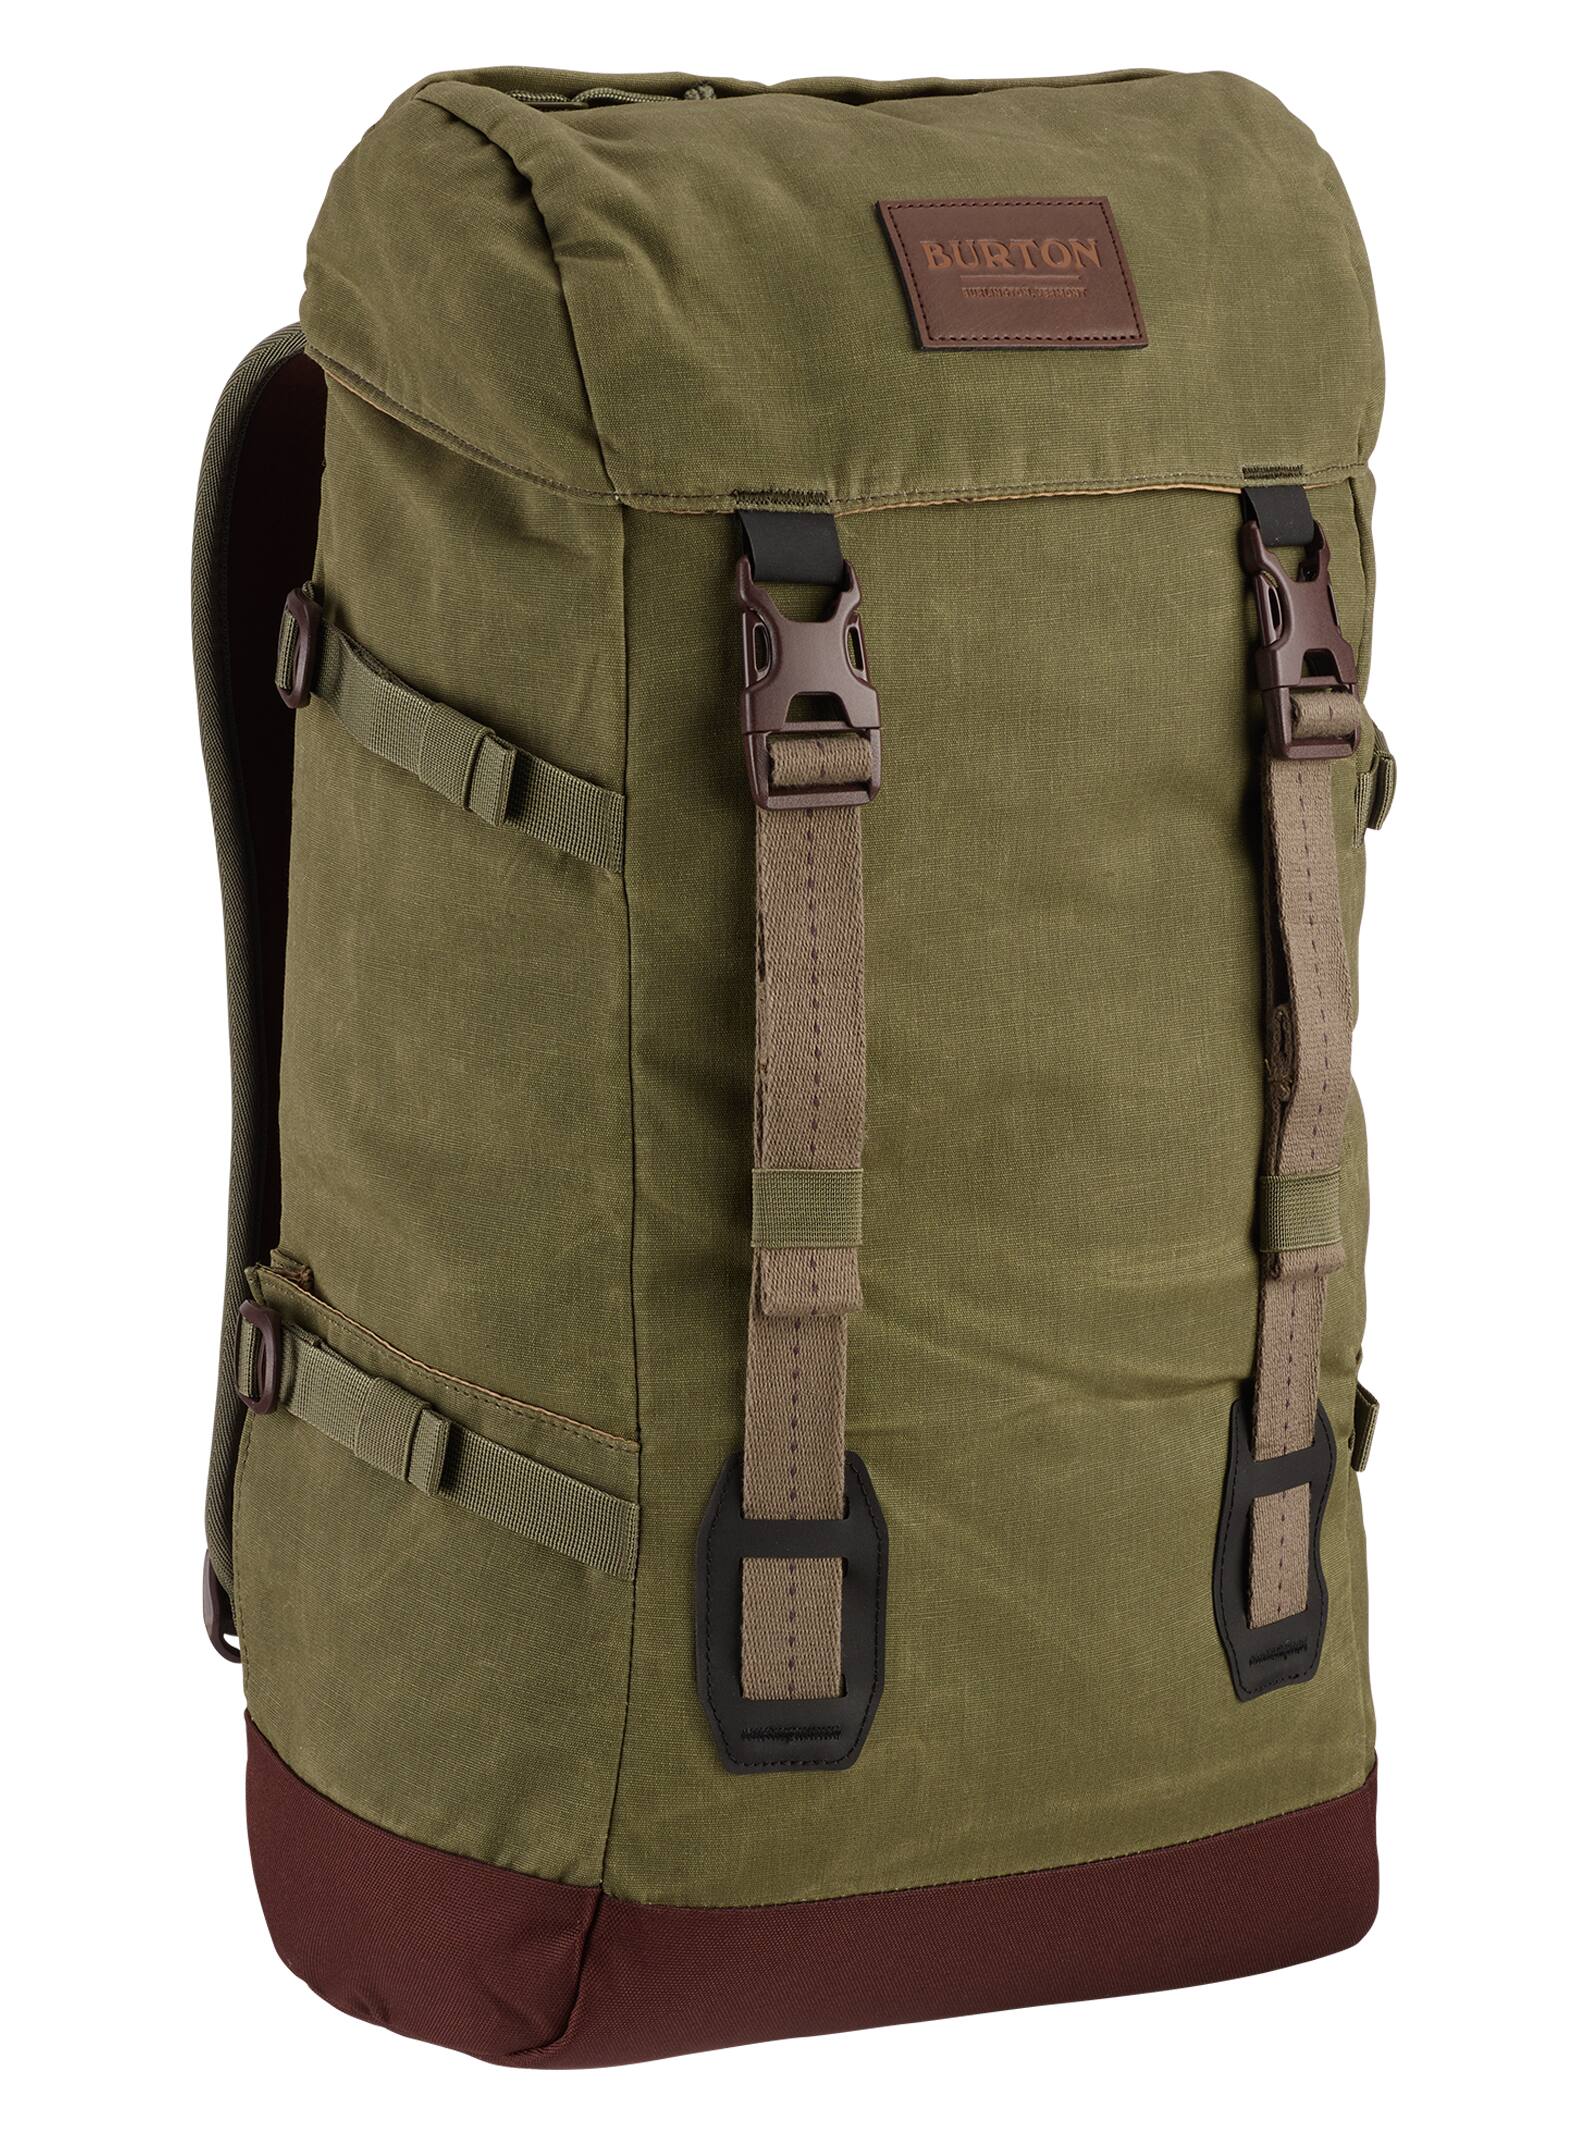 Burton Tinder 2.0 30L Backpack | Burton.com Winter 2020 US